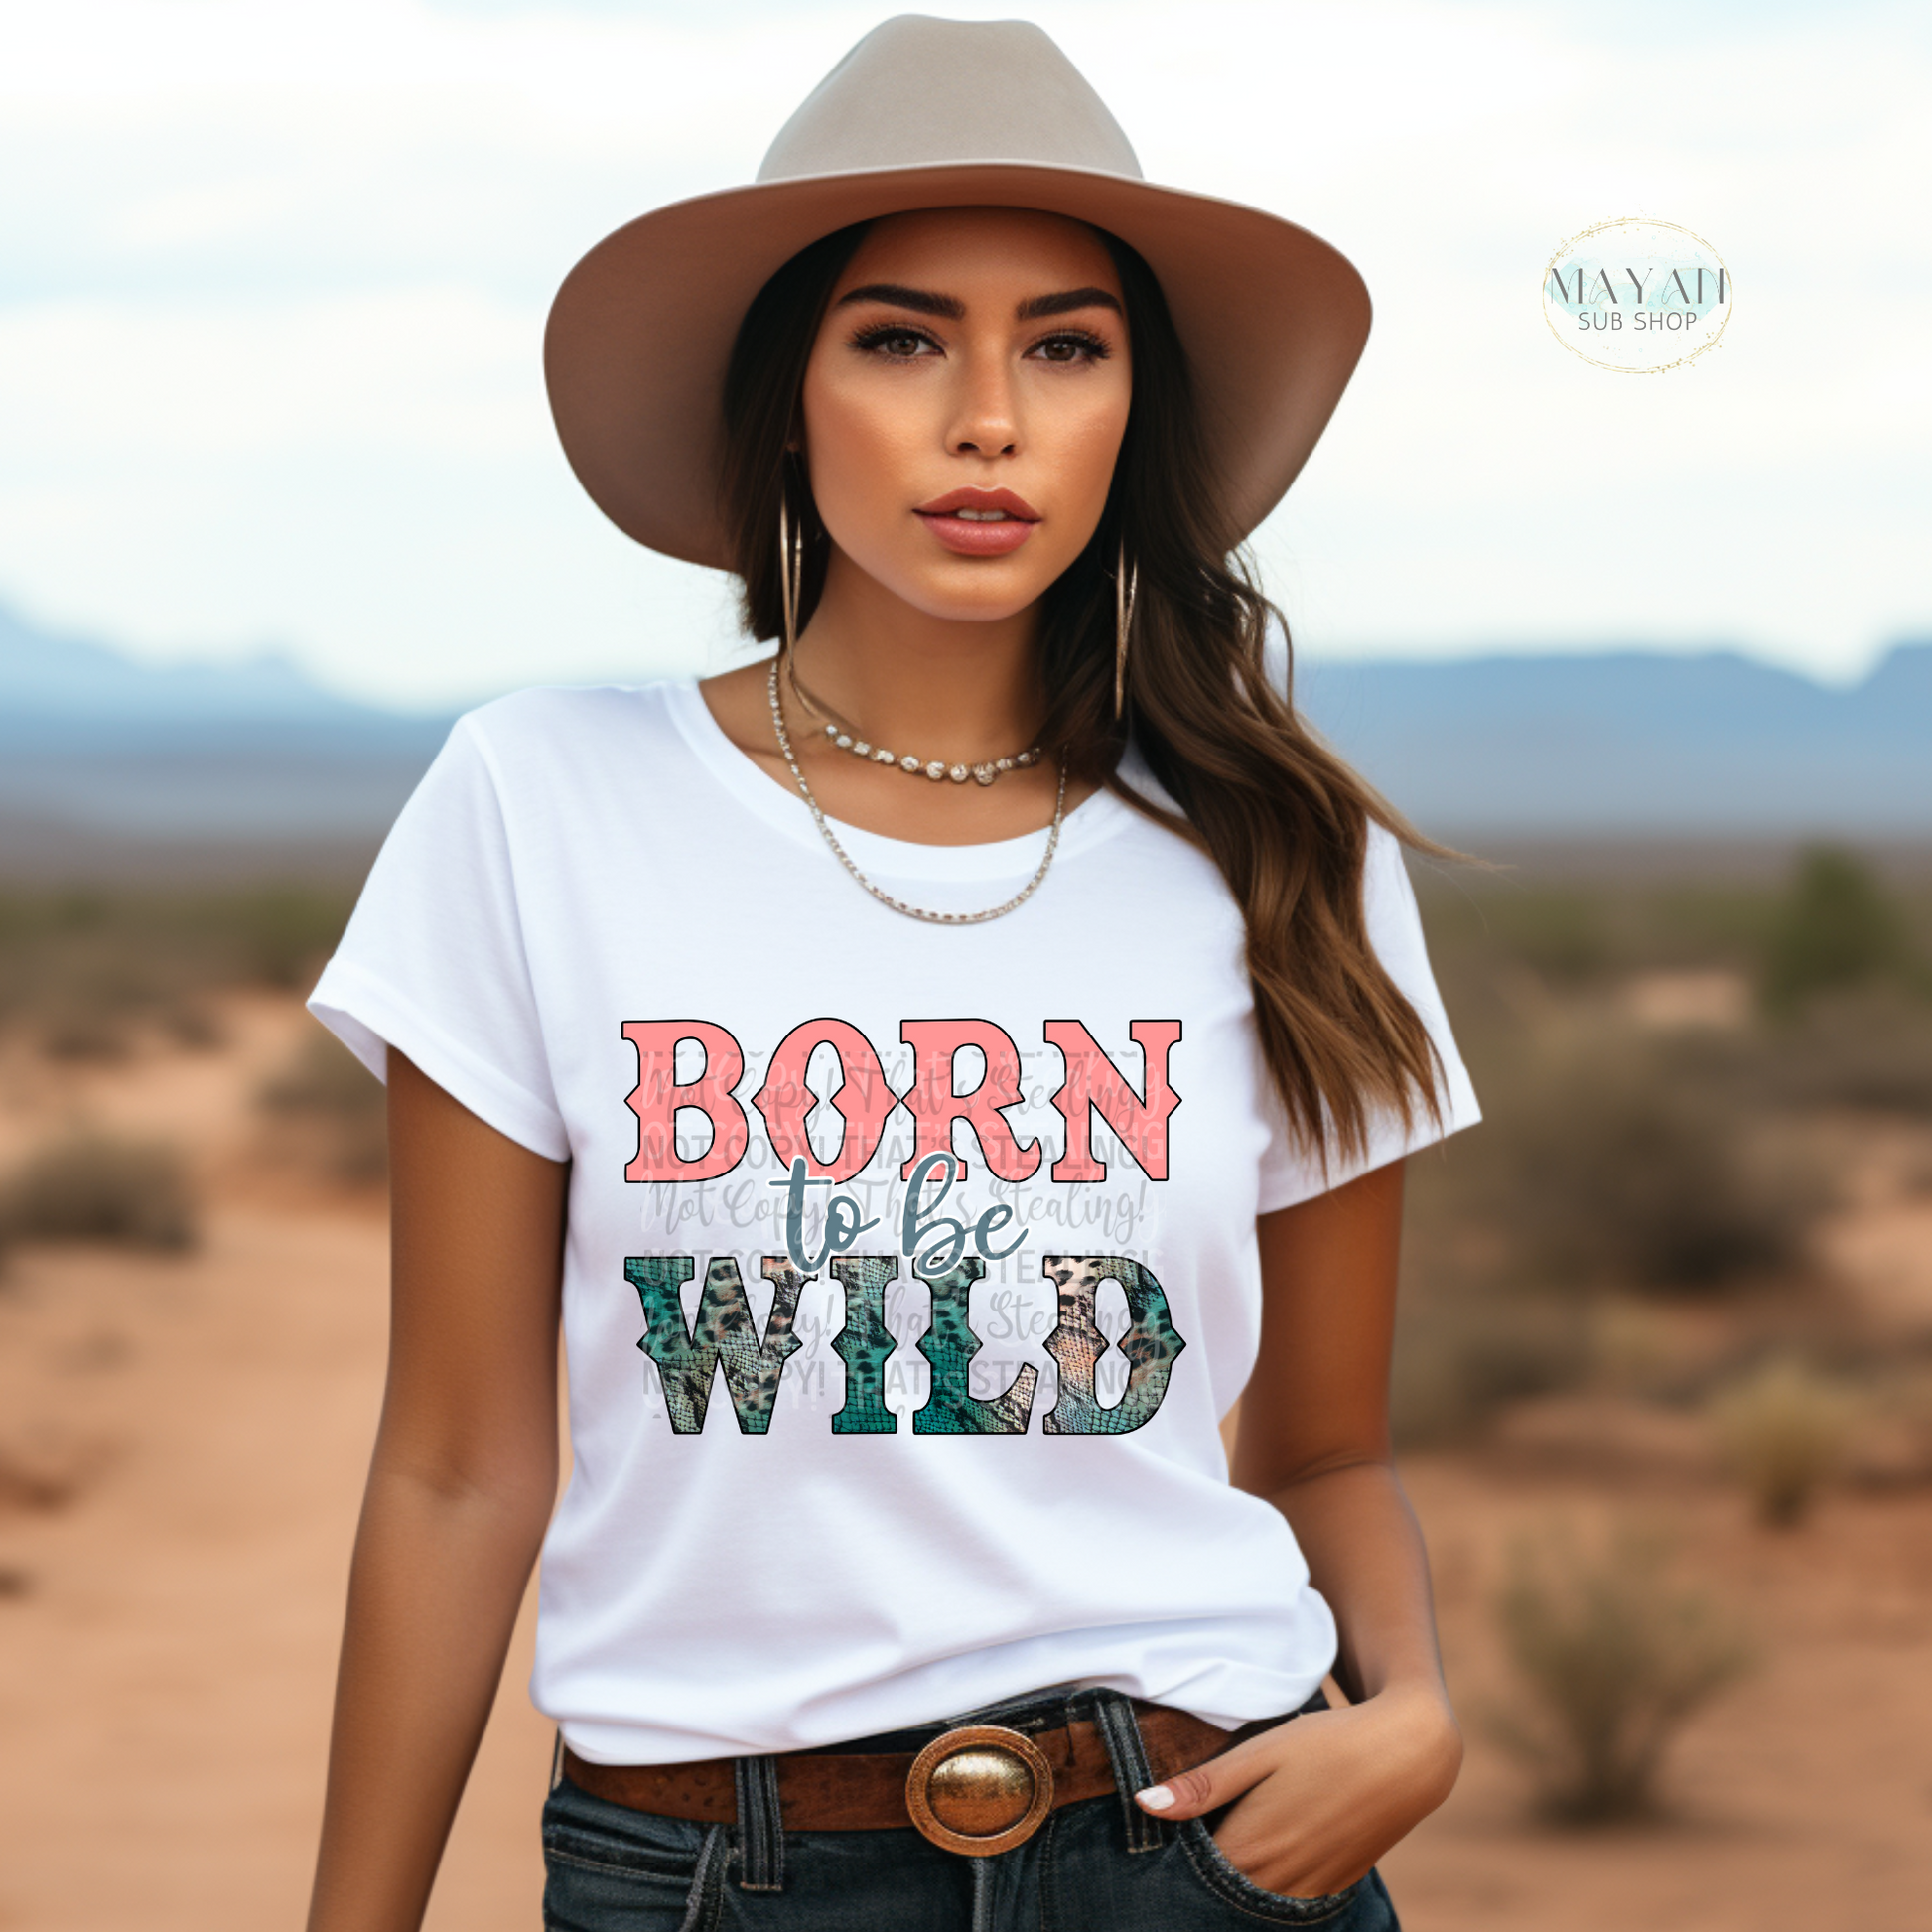 Born to be wild shirt. -Mayan Sub Shop